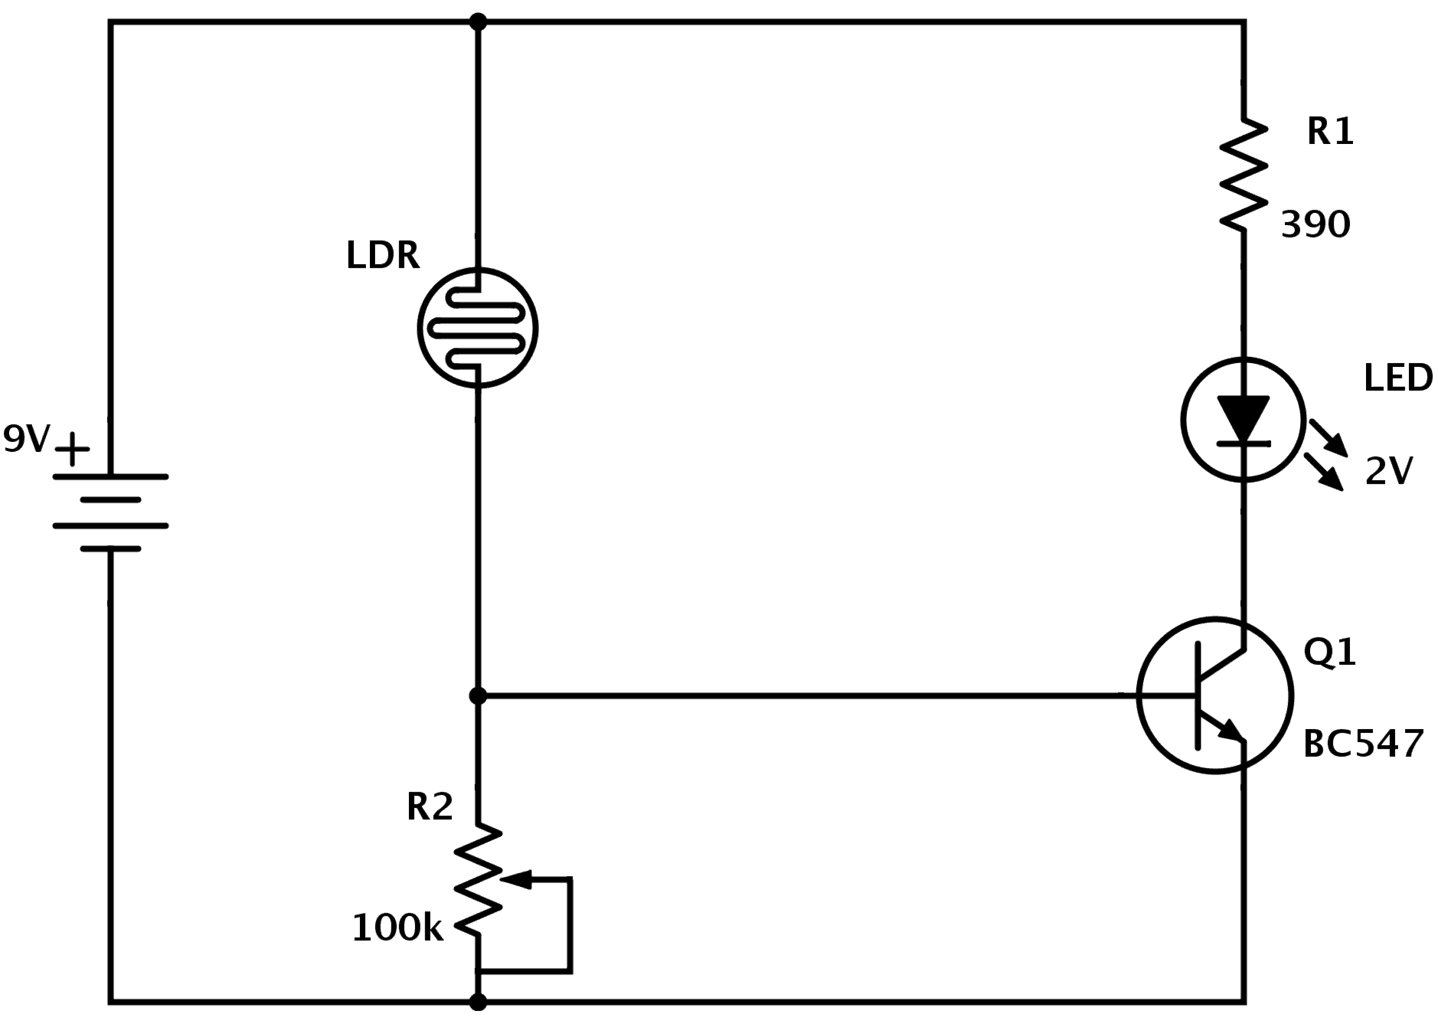 Basic Schematic Wiring Diagrams - Wiring Block Diagram - Schematic Wiring Diagram